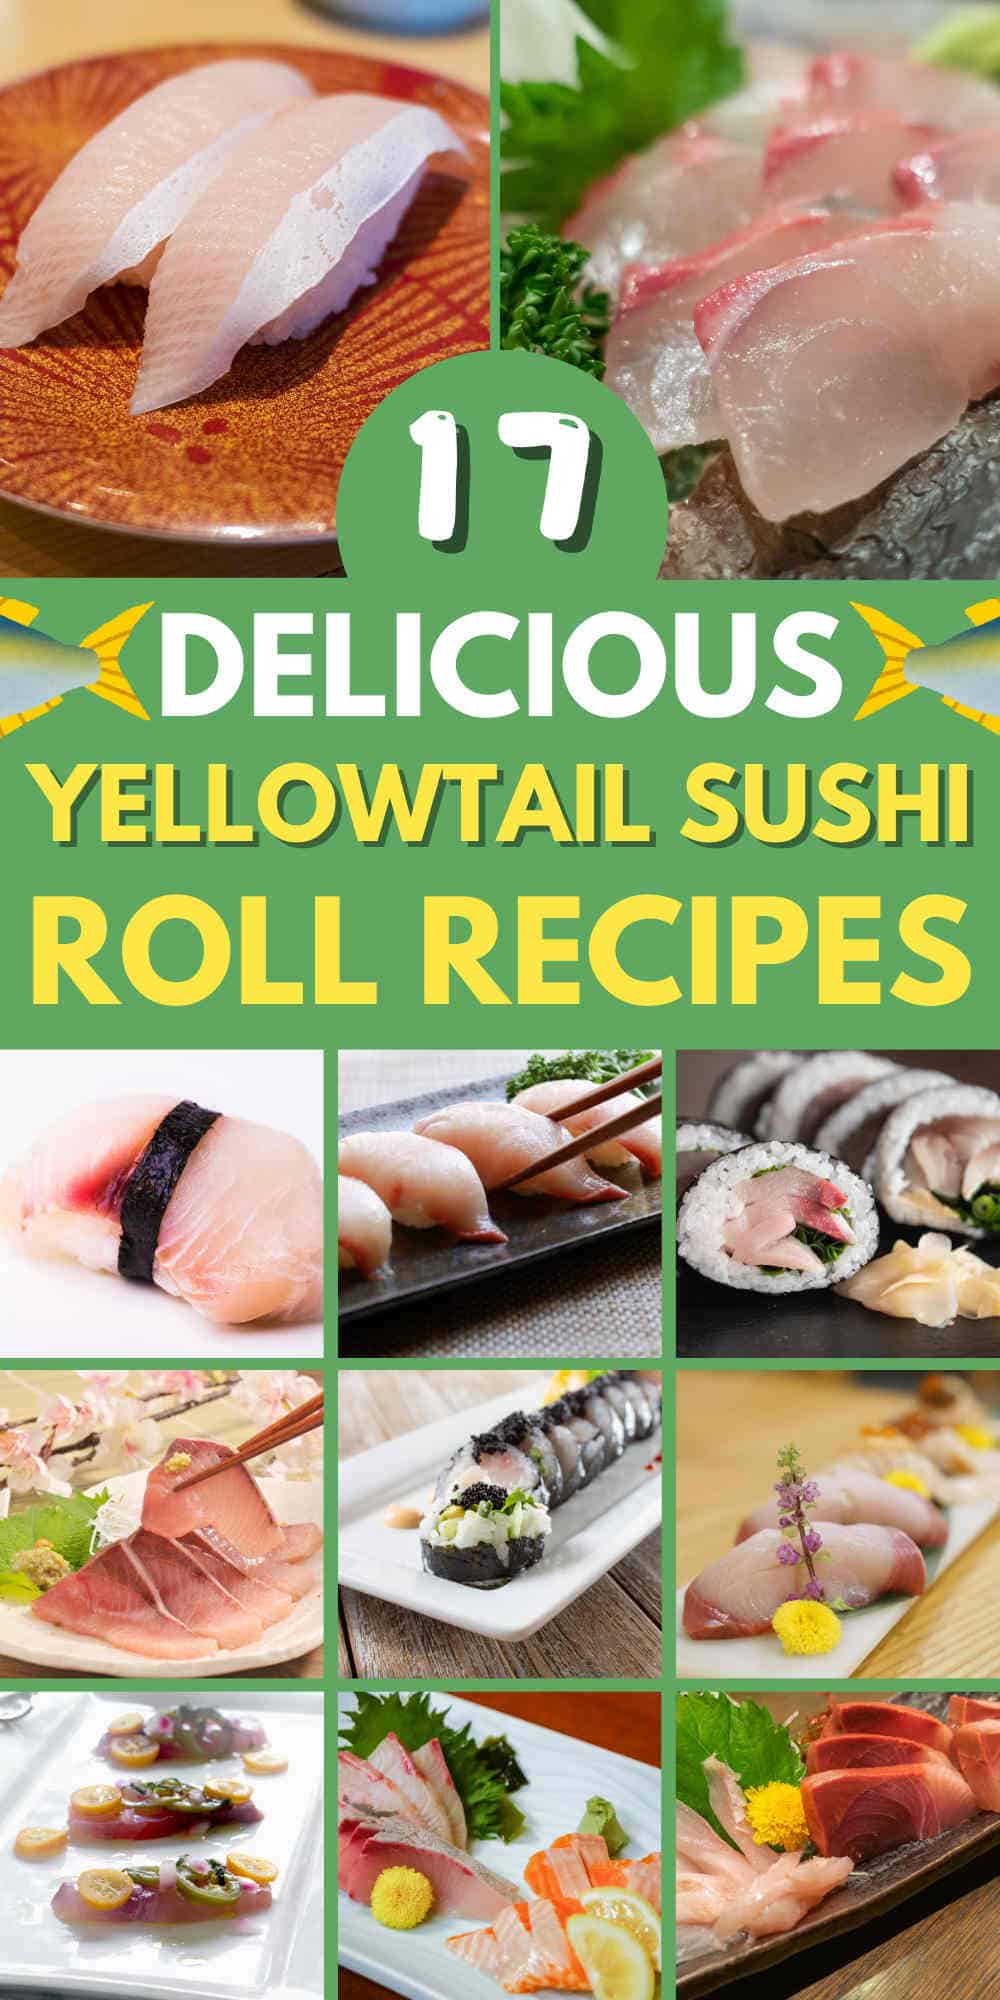 yellowtail sushi roll